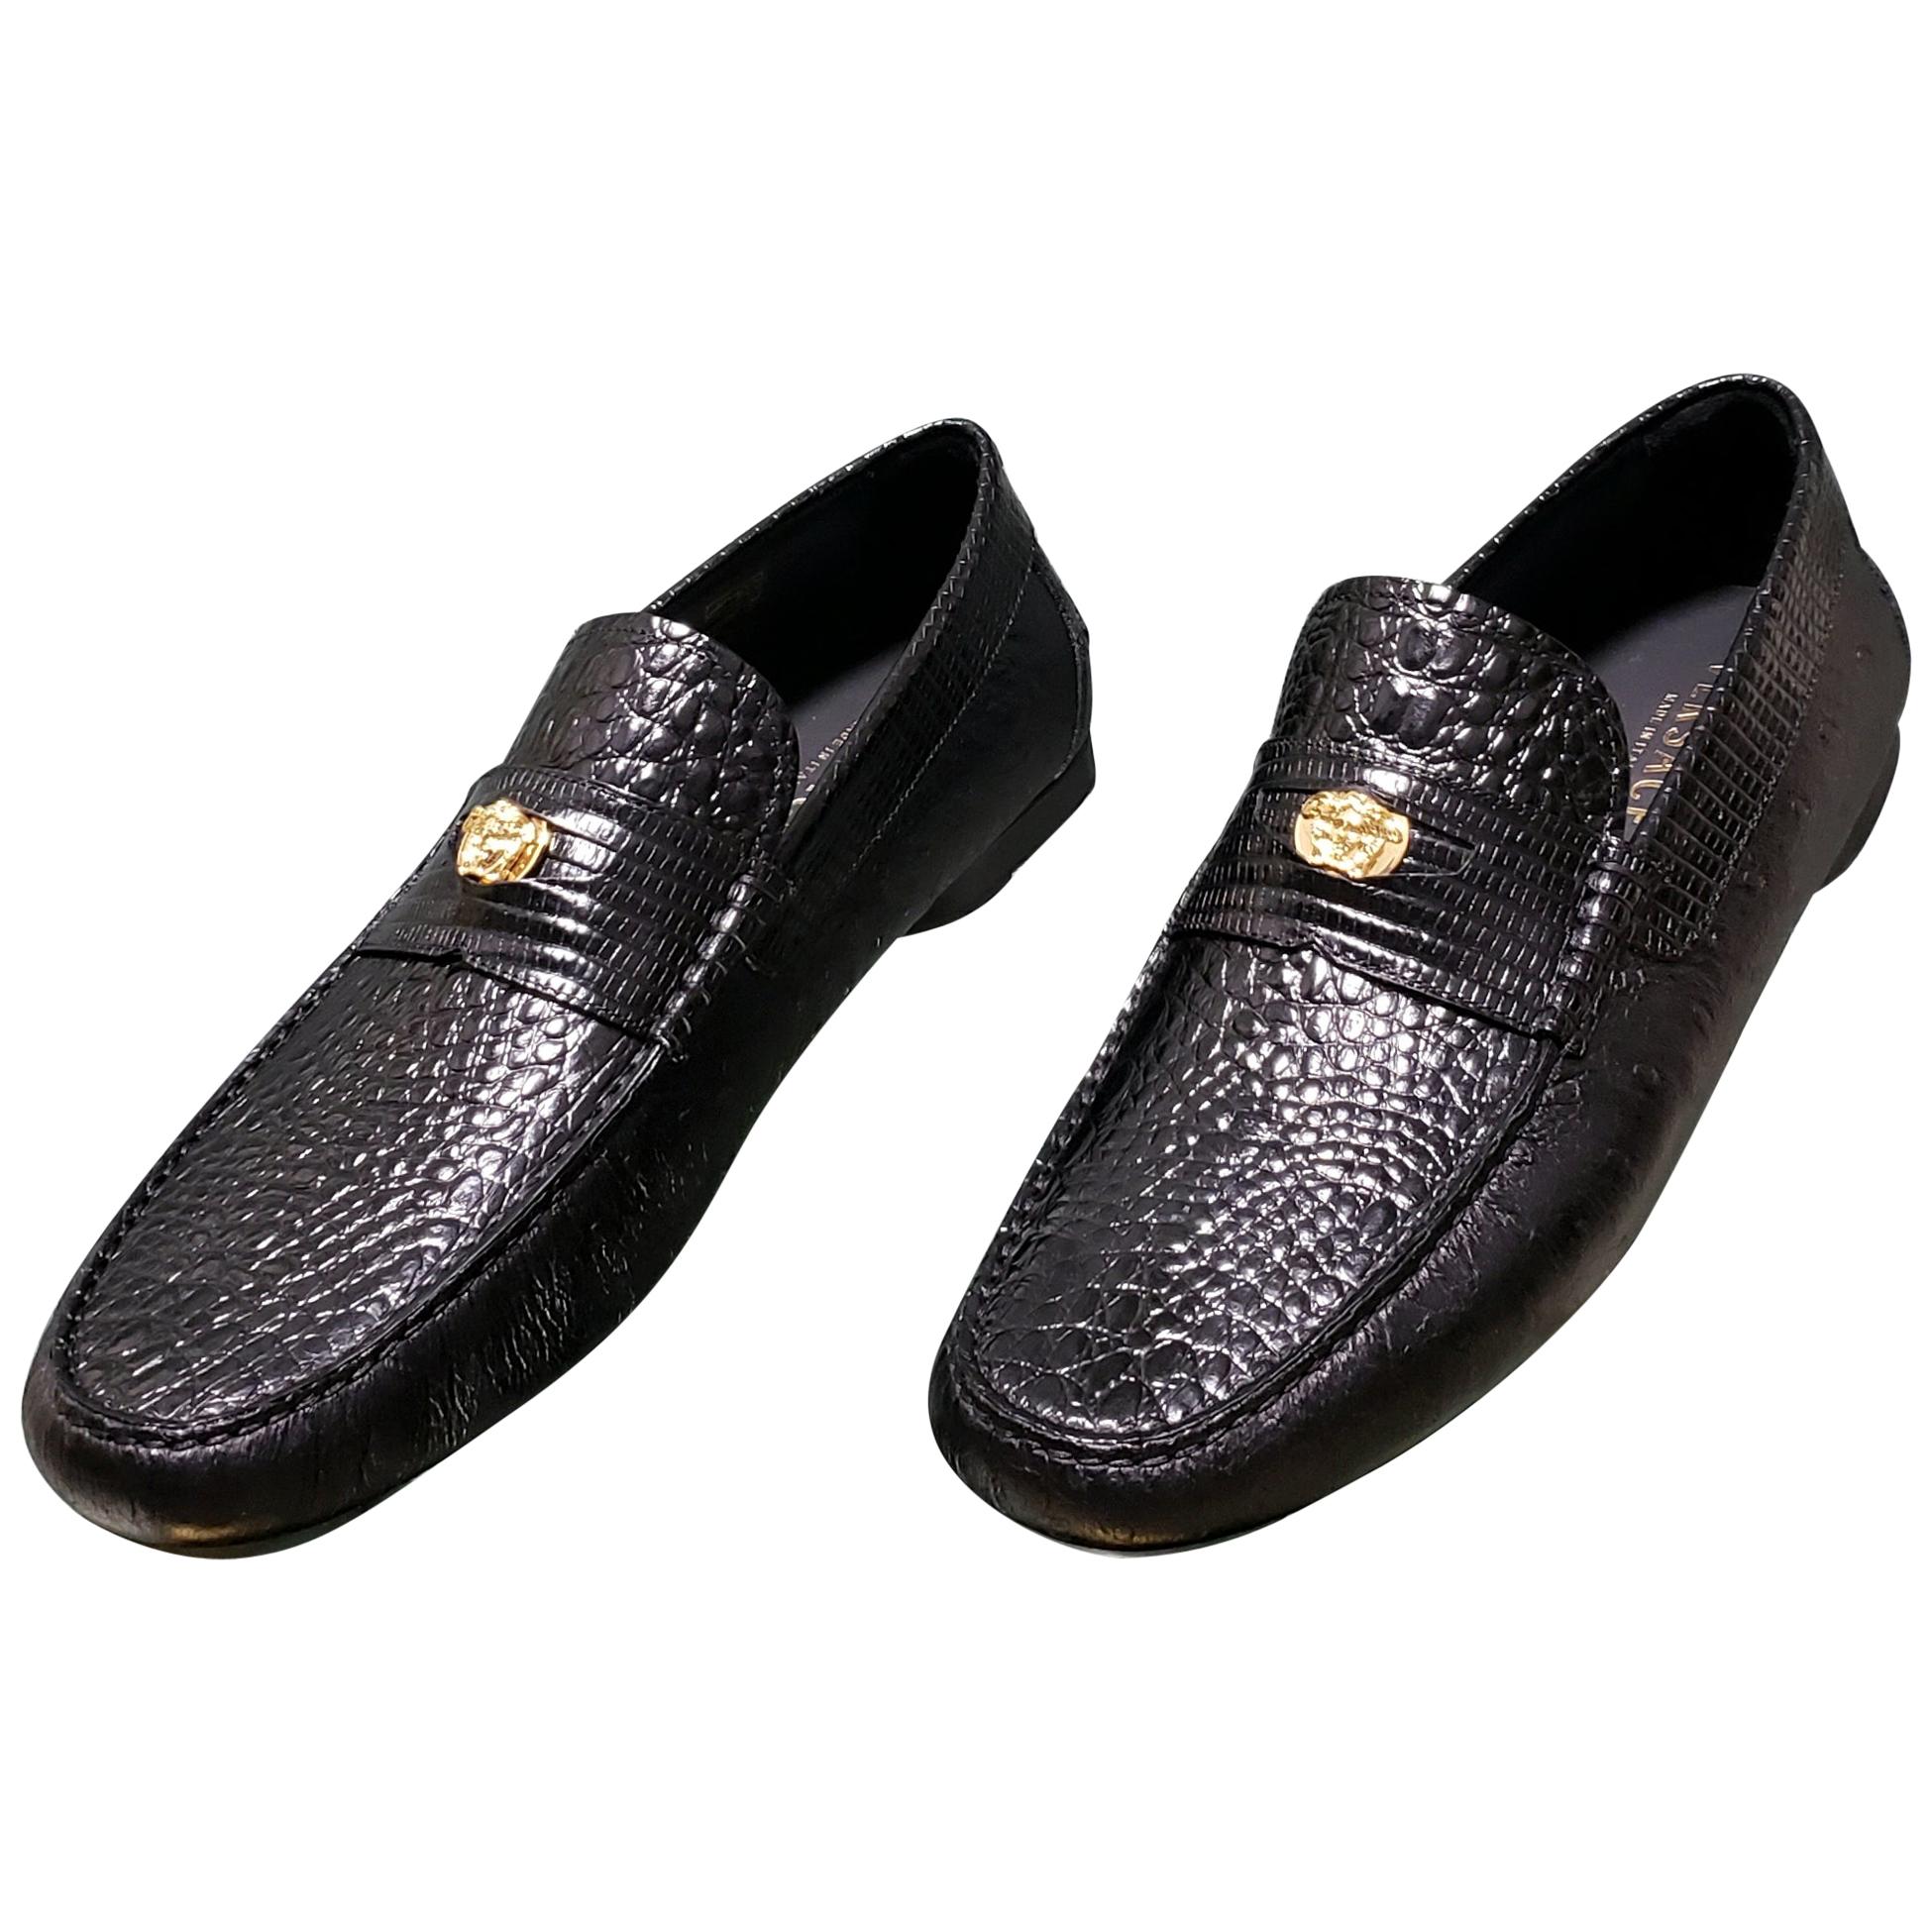 versace alligator shoes